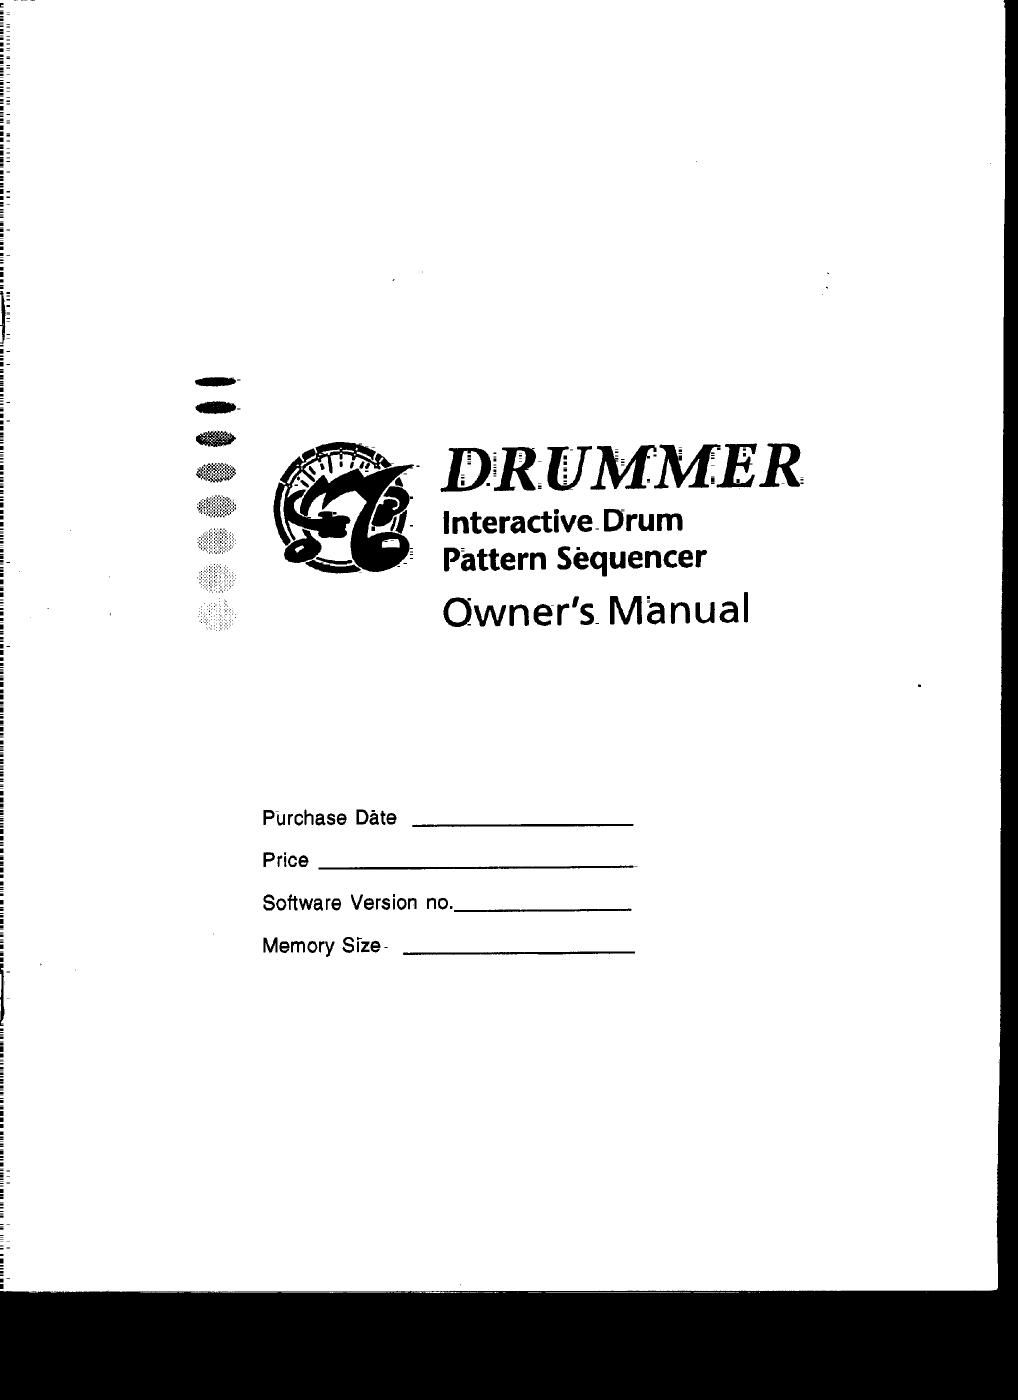 oberheim perf x drummer users manual